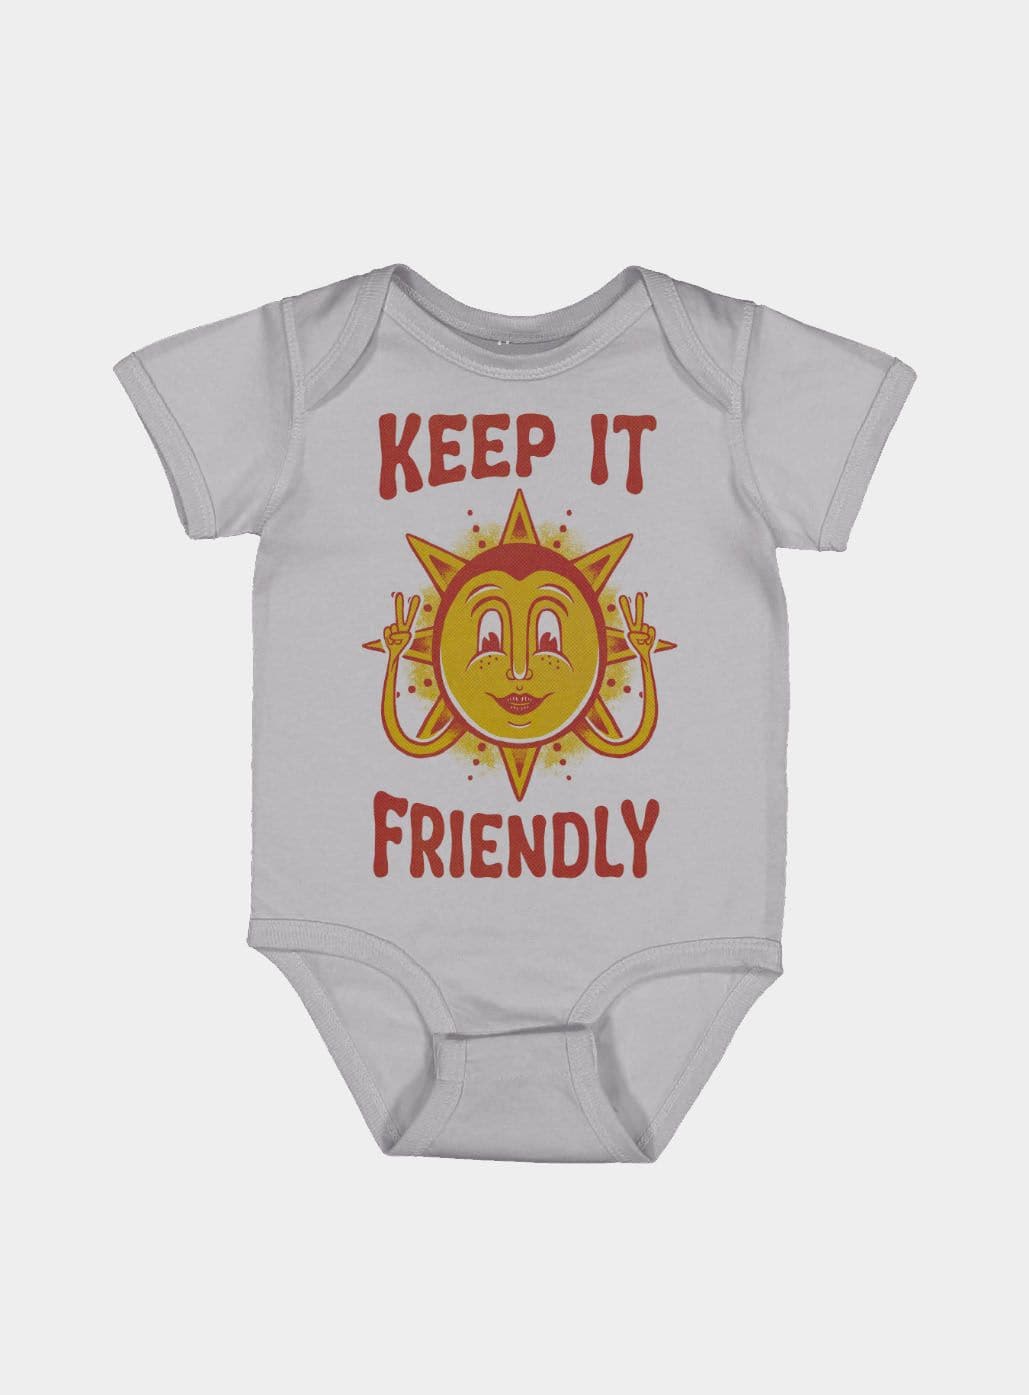 Shop Good | Keep it Friendly baby onesie